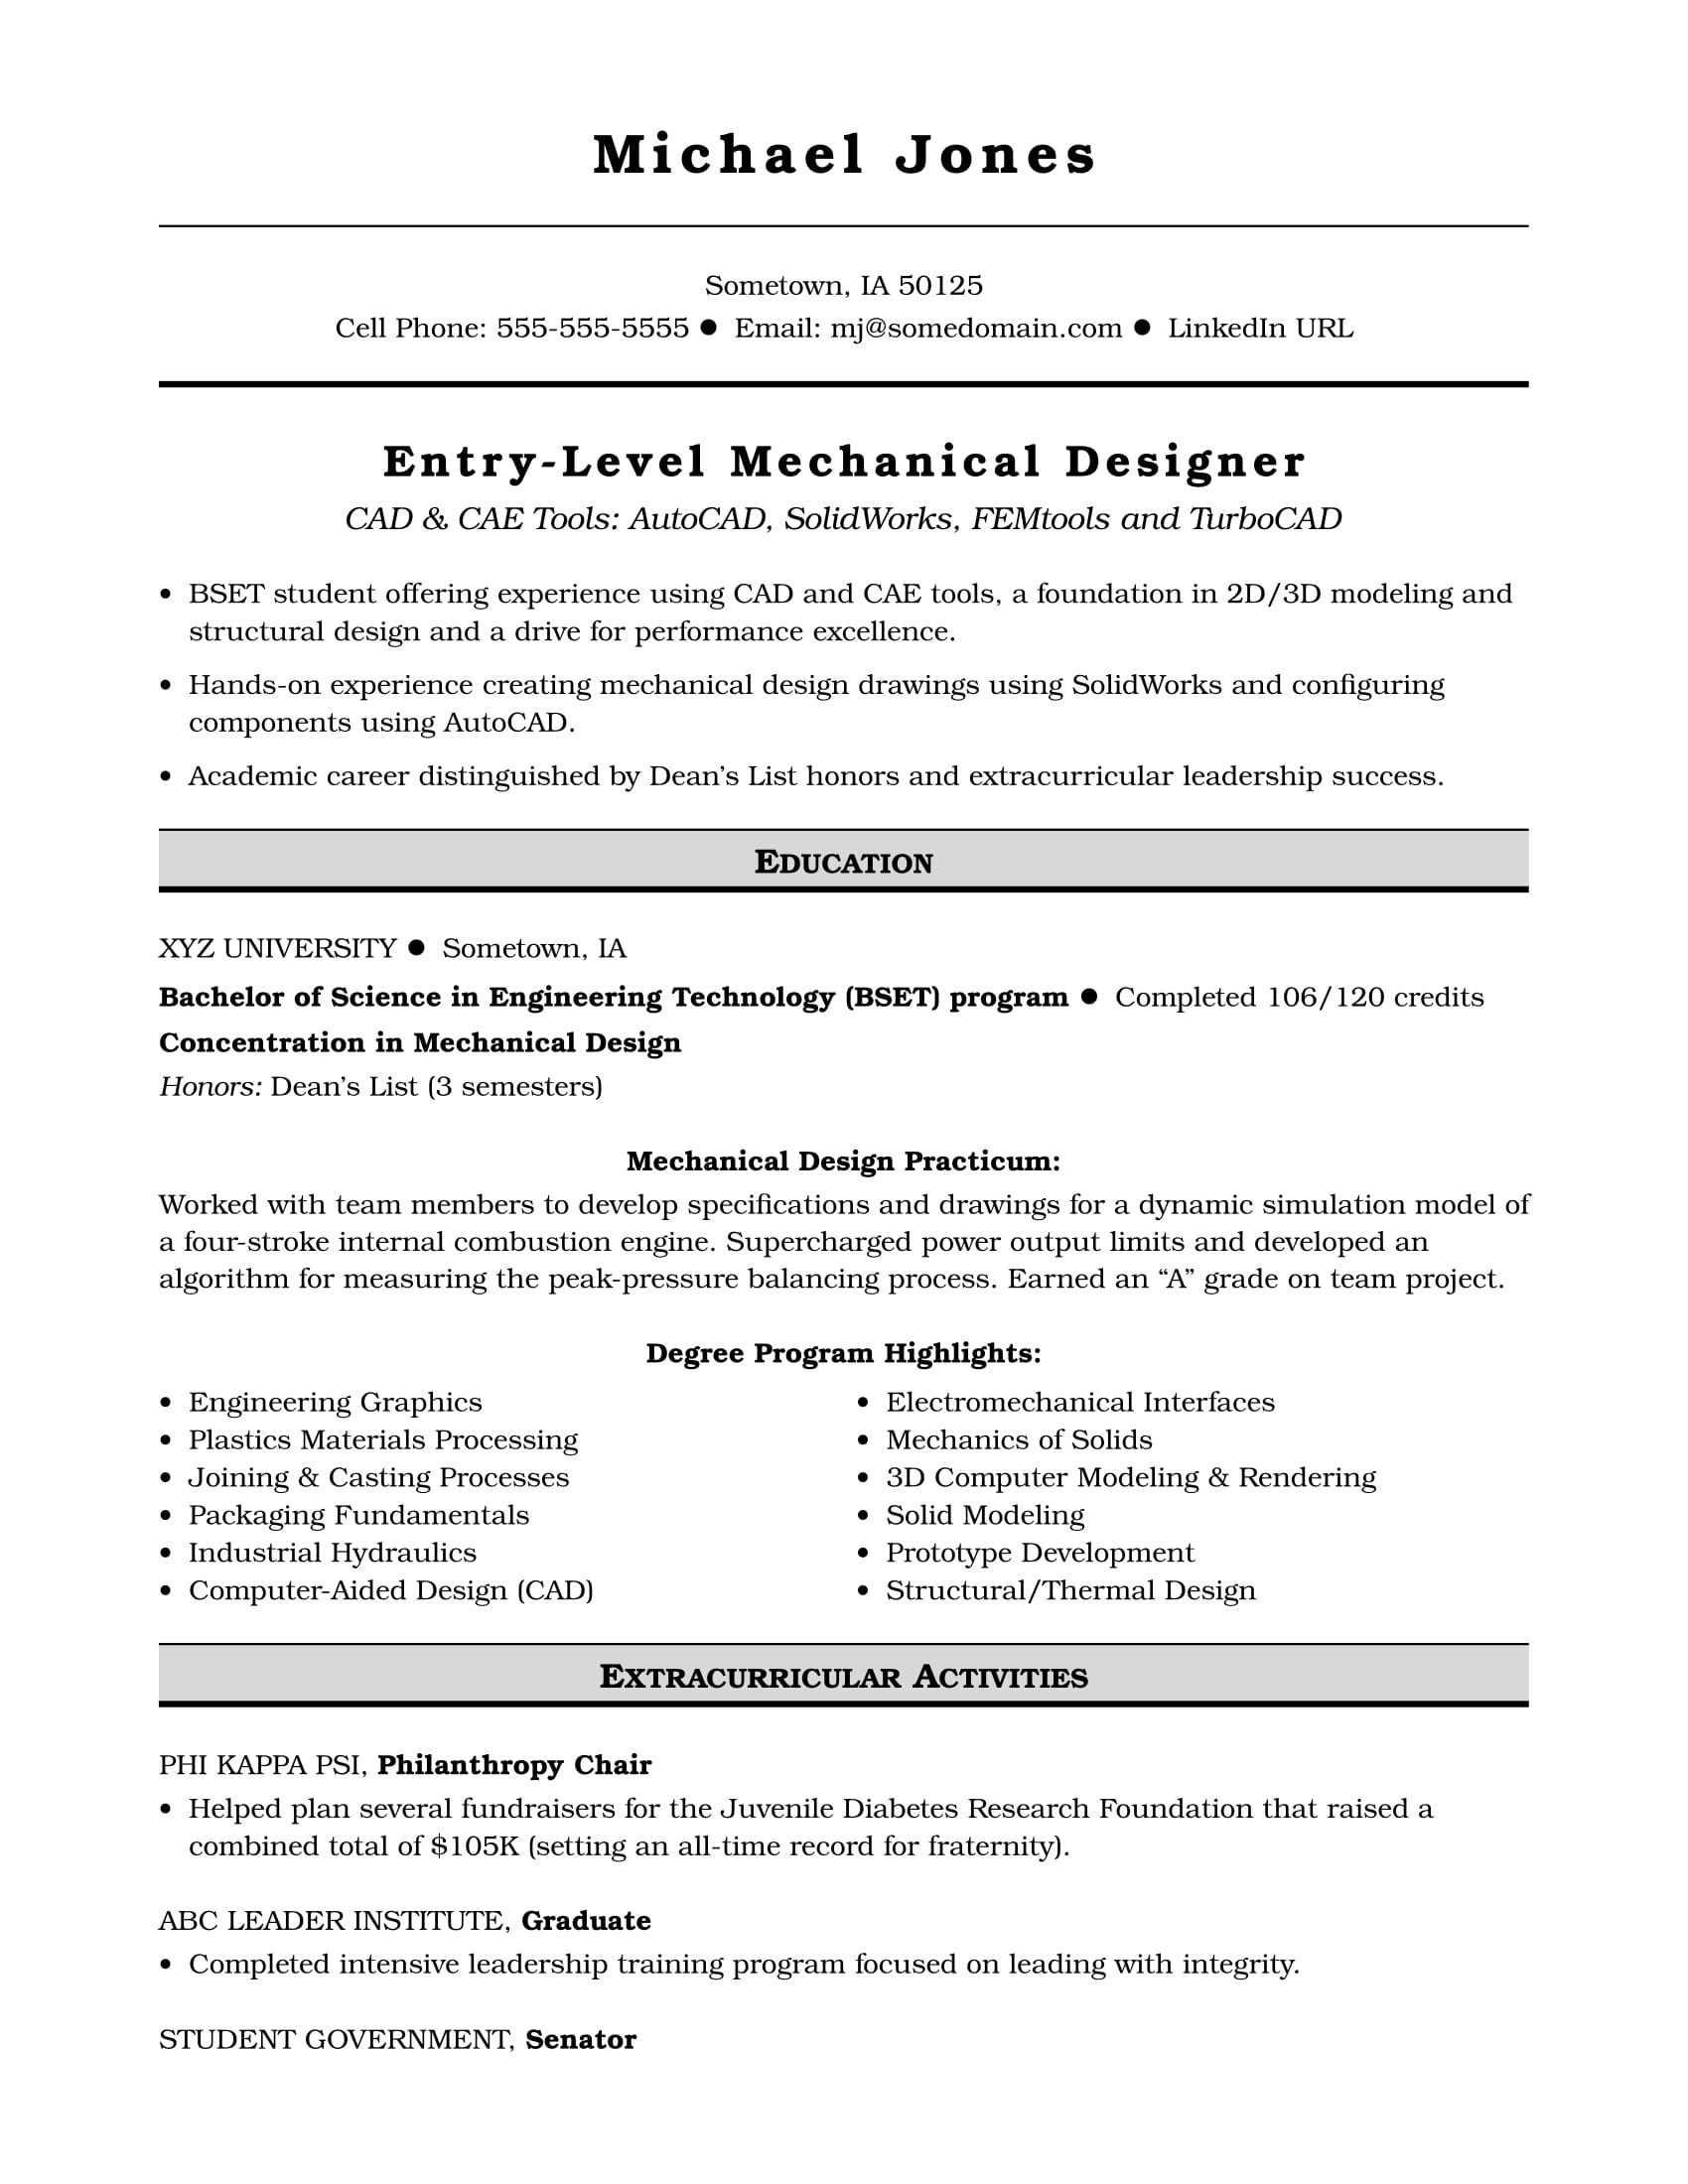 2d 3d Autocad Designer Skills Resume Samples Sample Resume for An Entry-level Mechanical Designer Monster.com